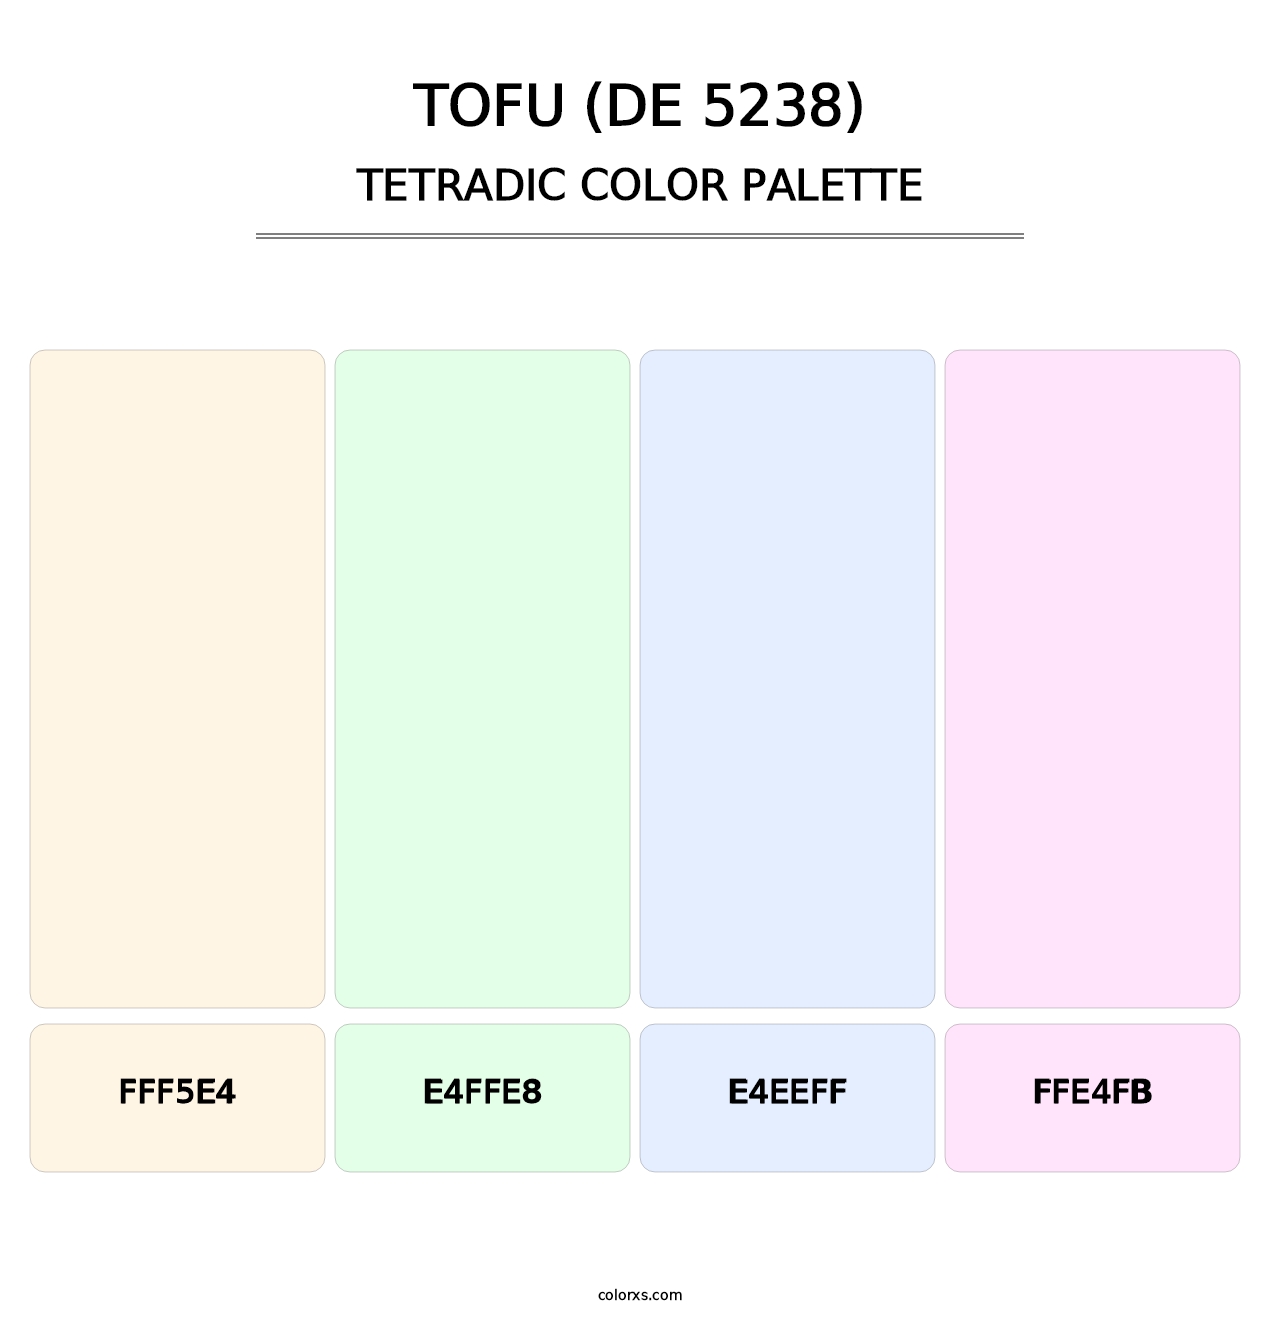 Tofu (DE 5238) - Tetradic Color Palette